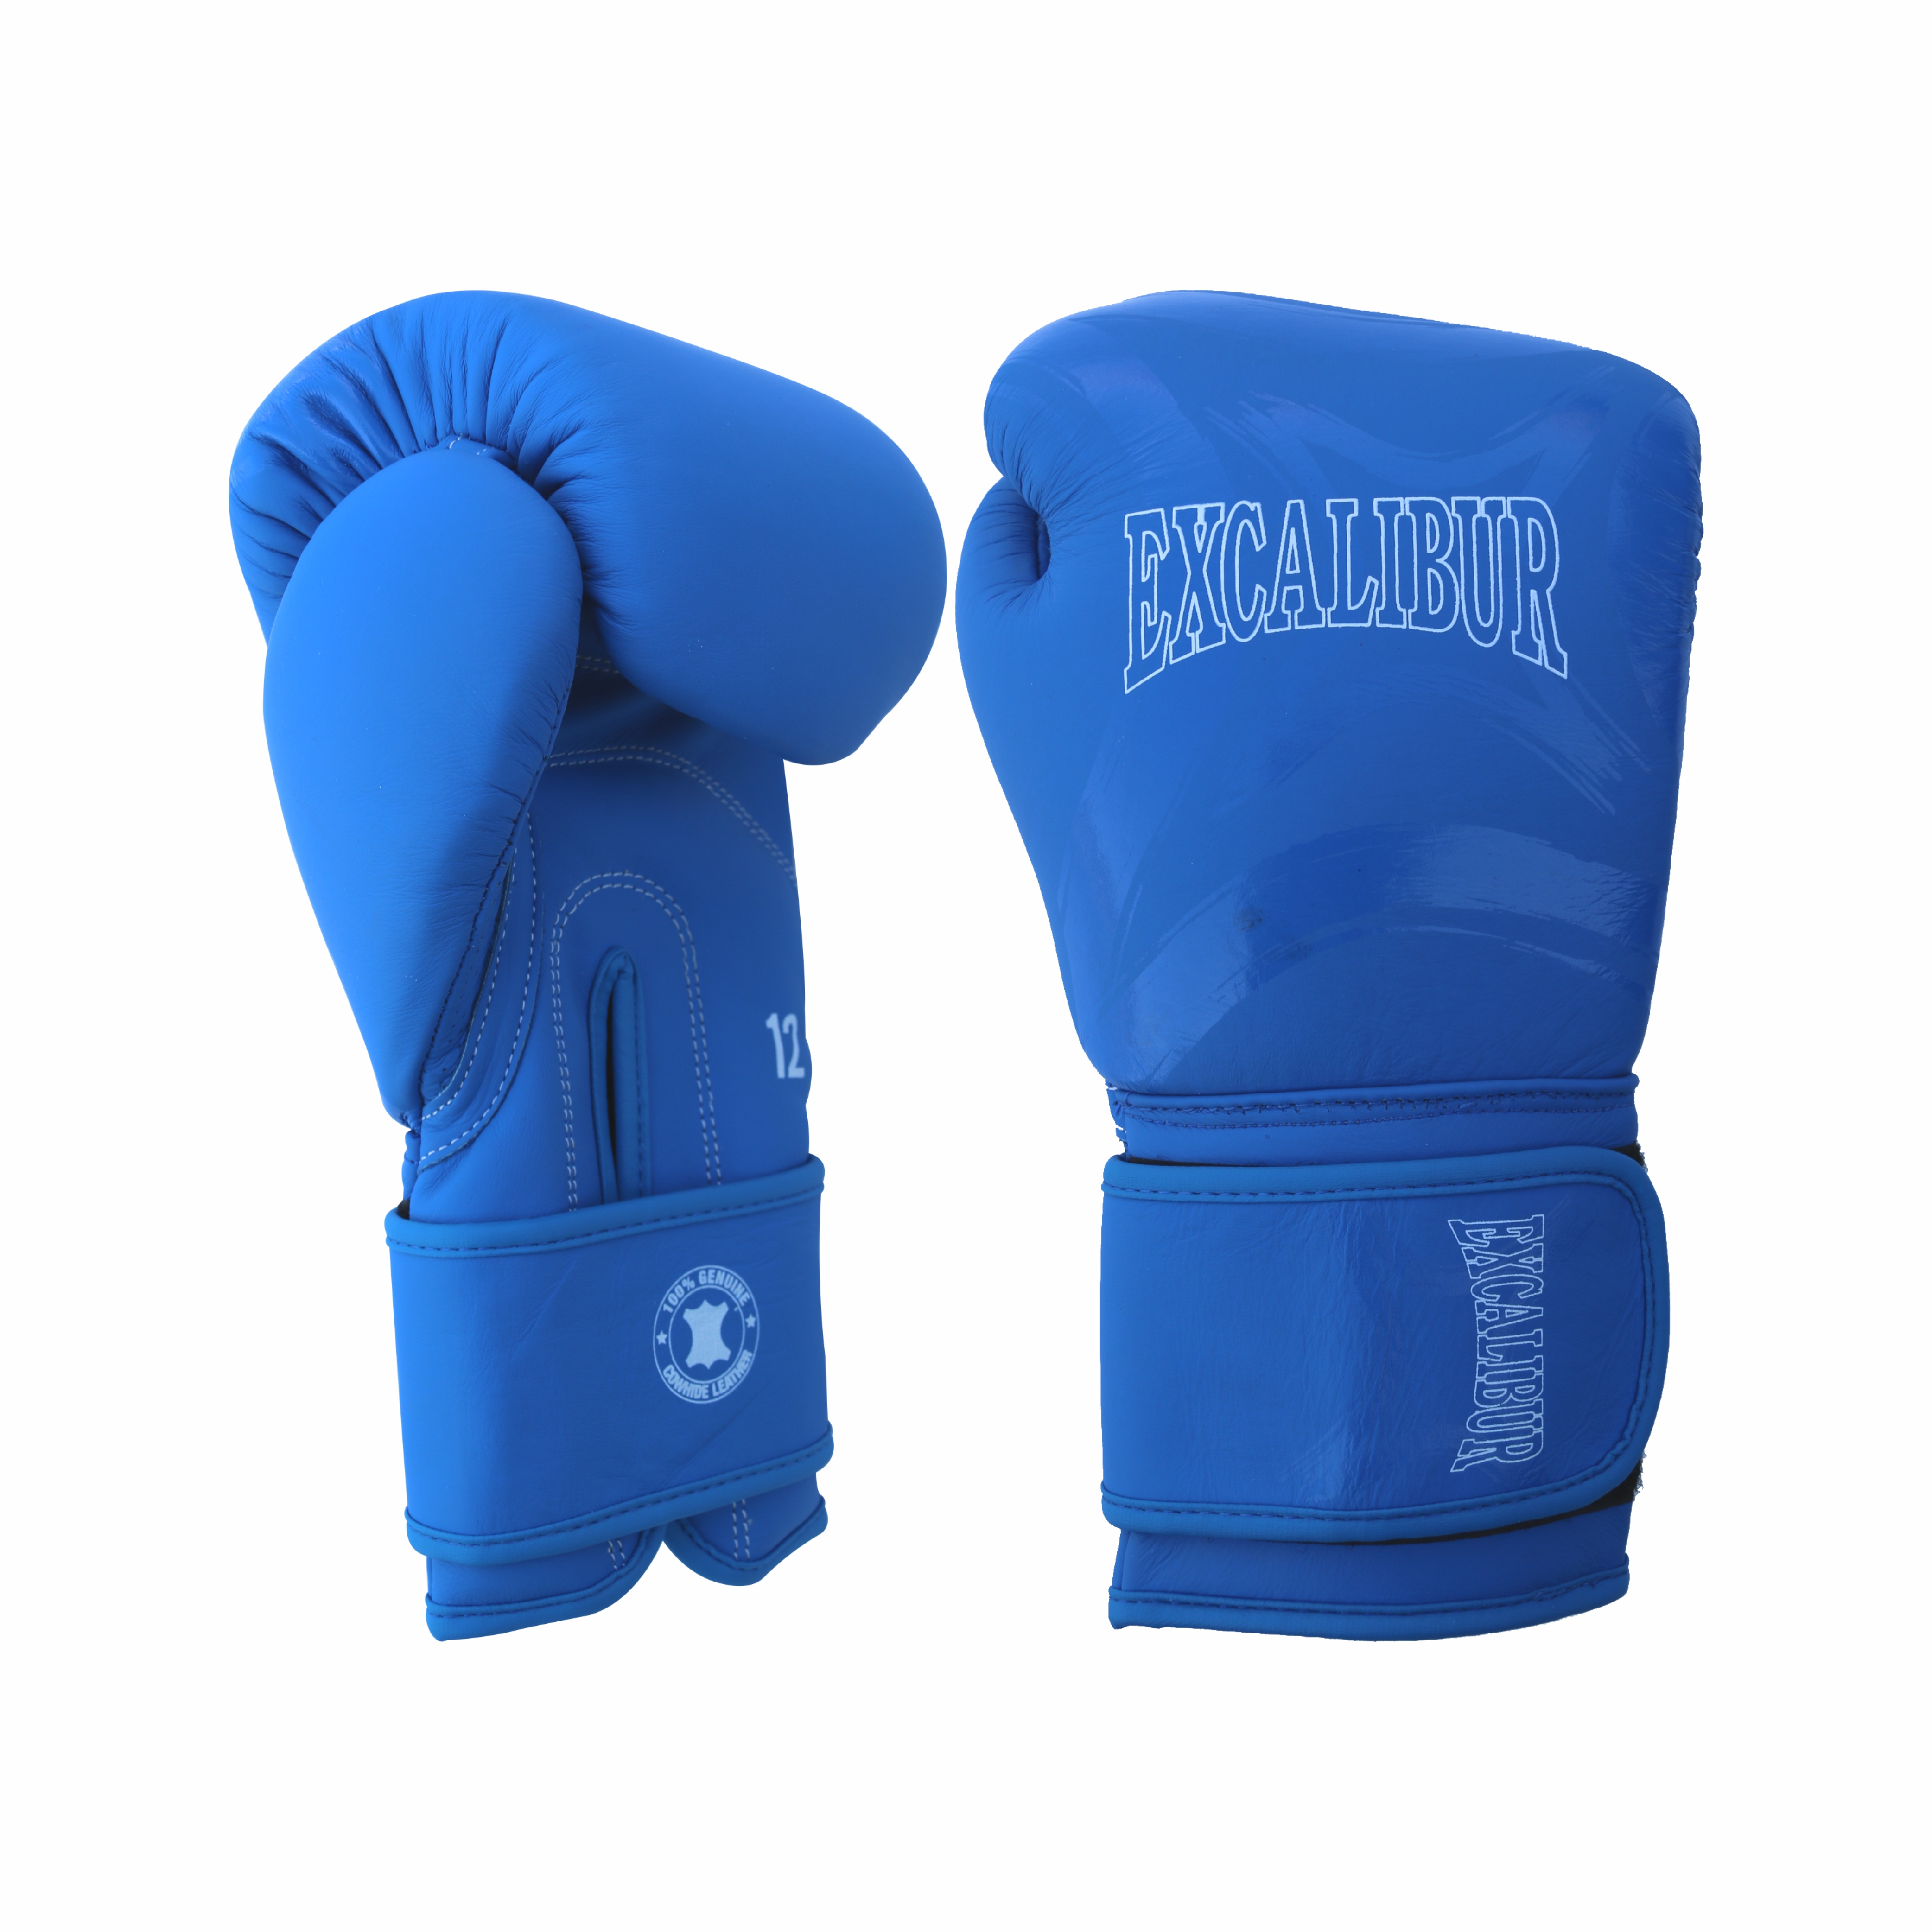 Cobra Boxing Gloves